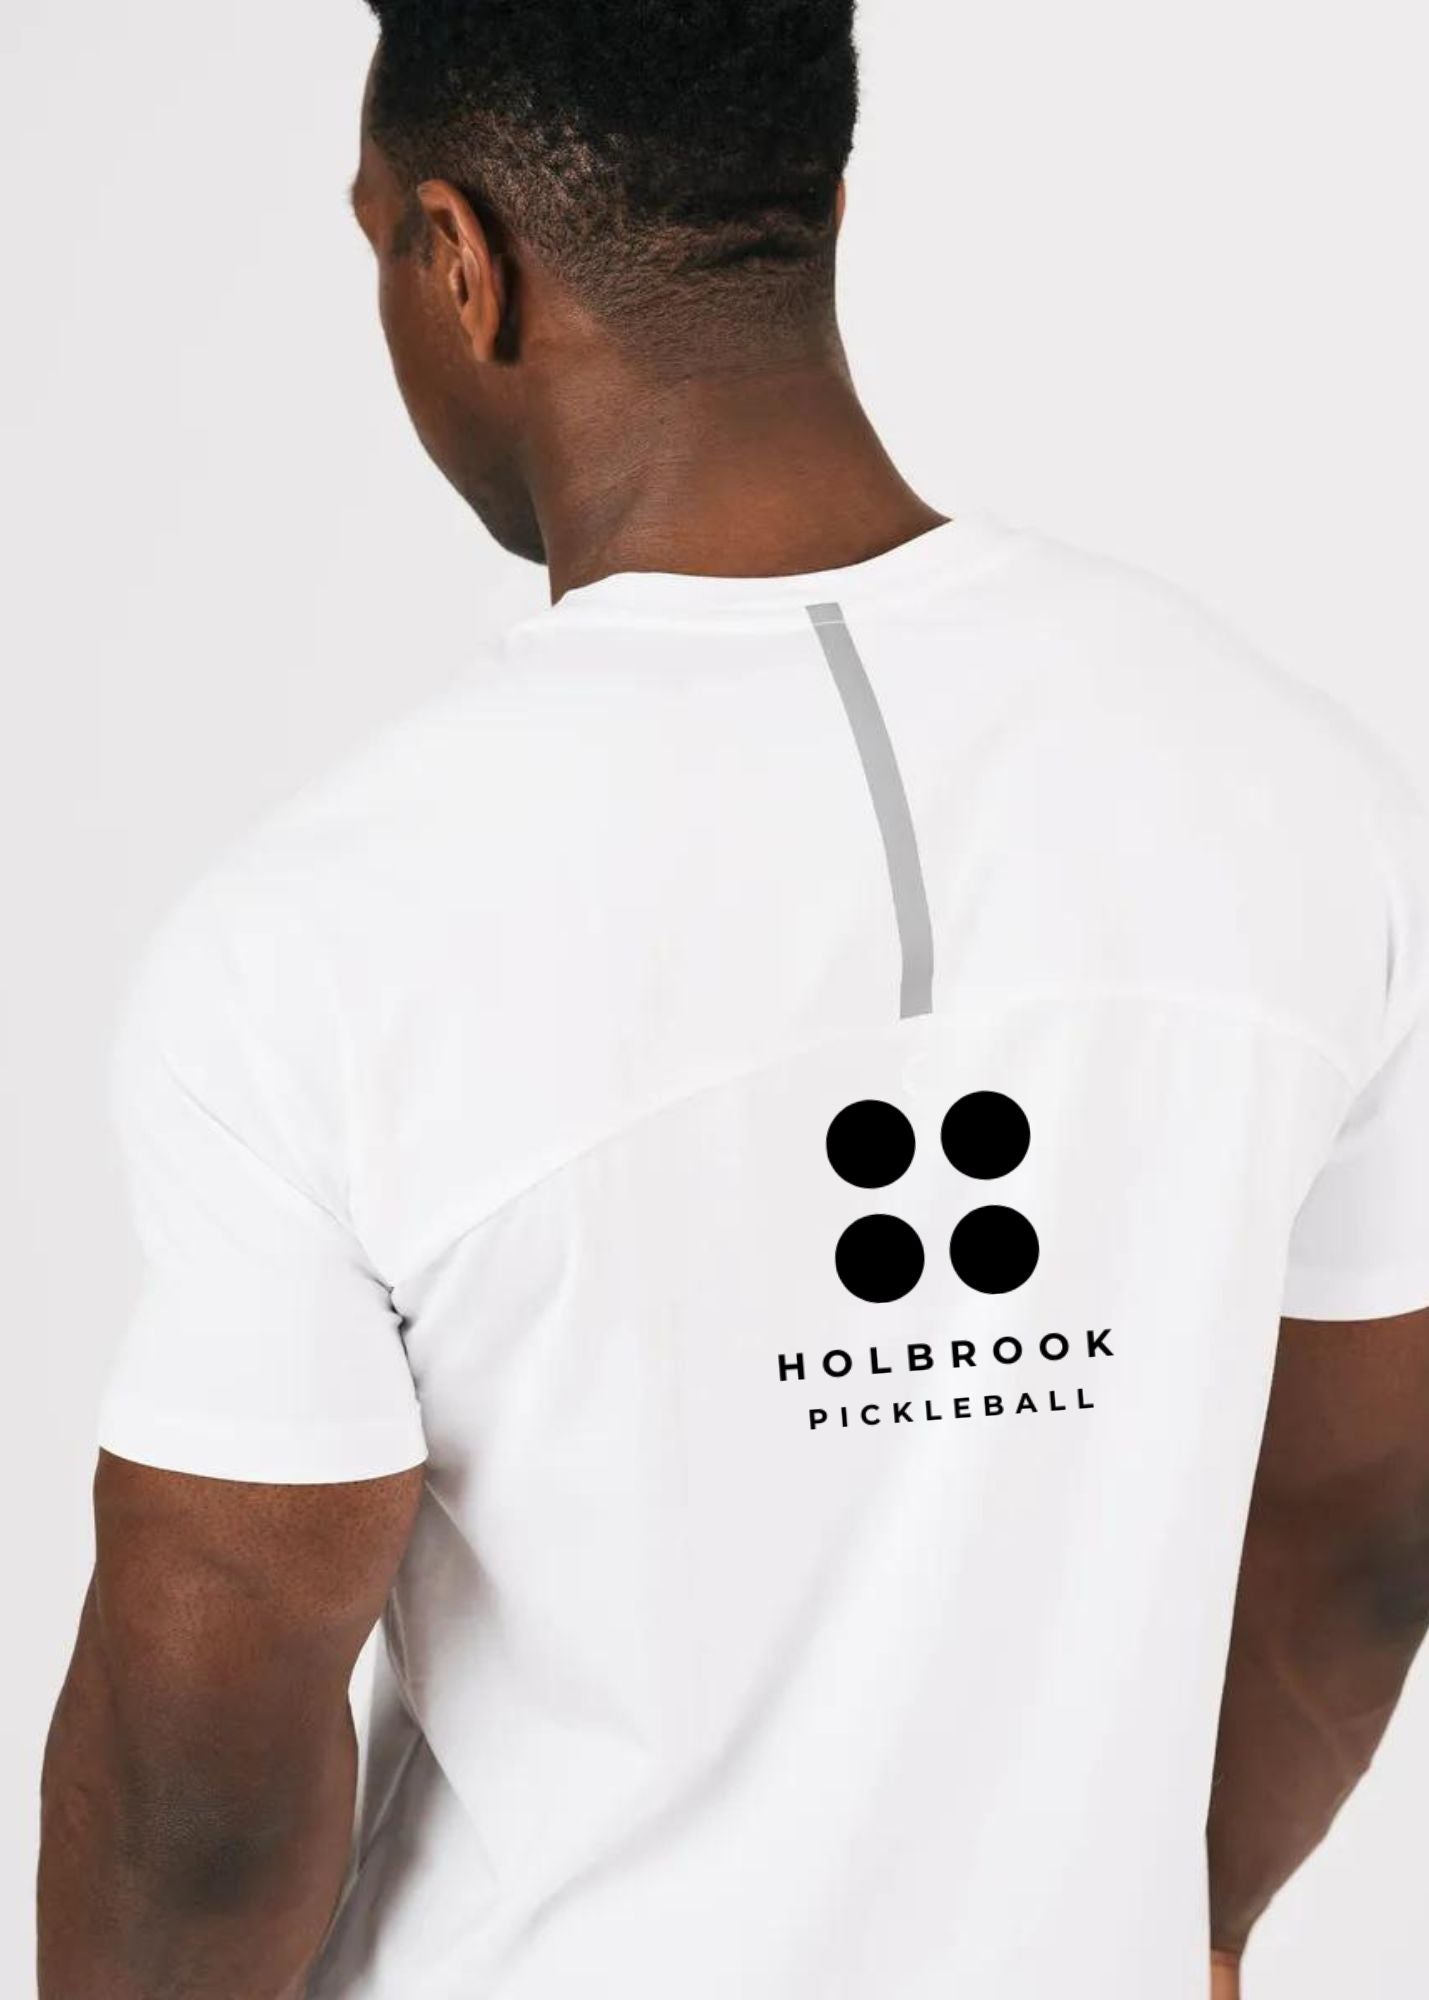 Men's Champion Shirt - Holbrook Pickleball